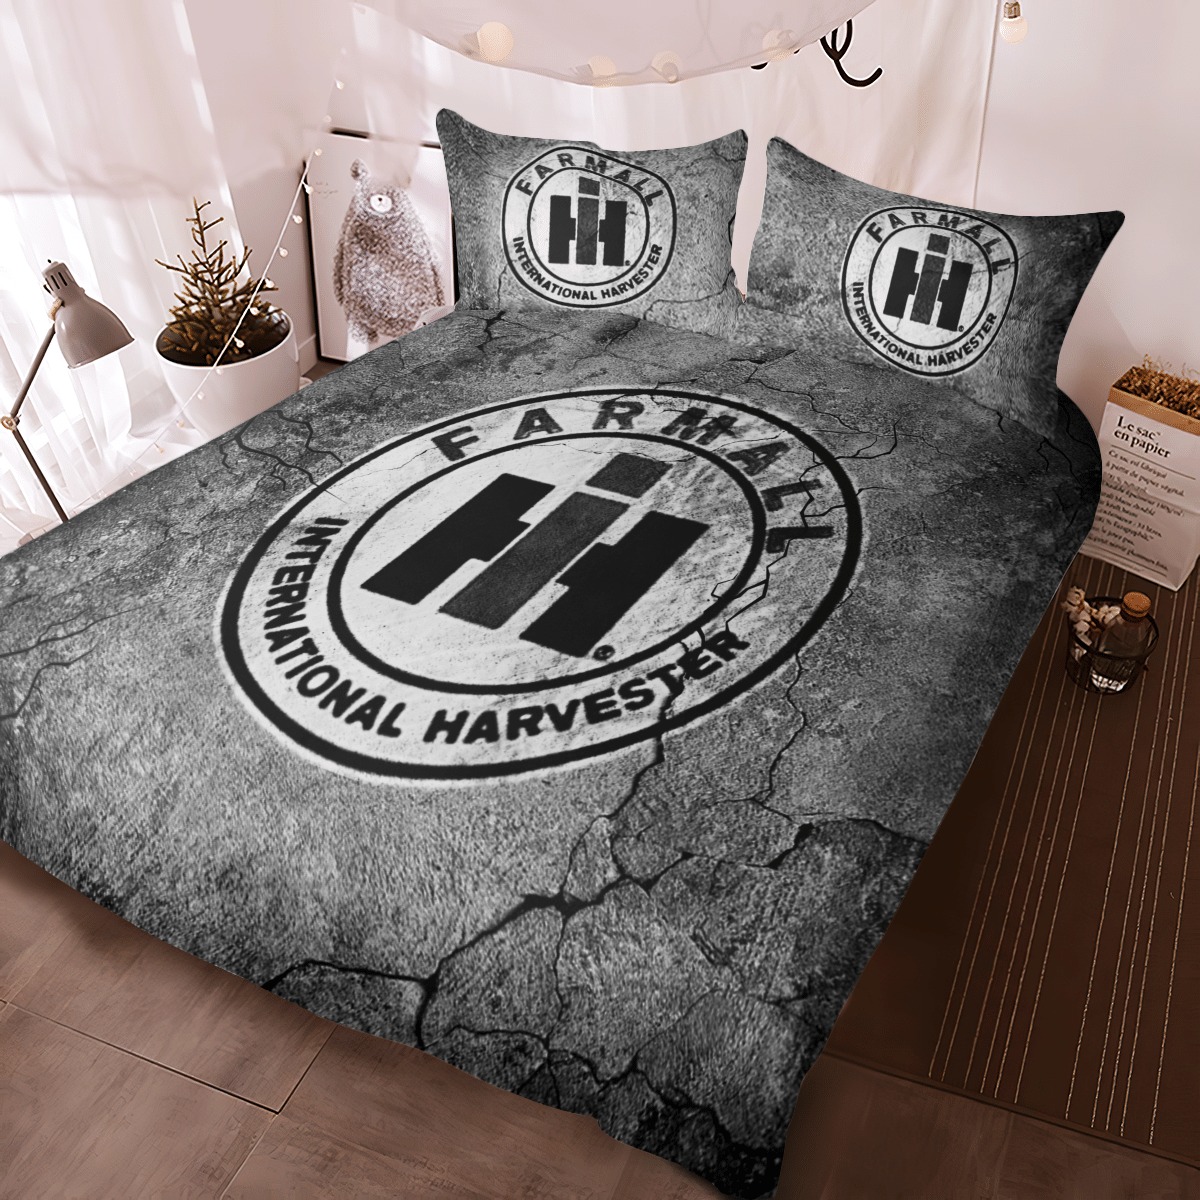 Farmall International Harvester quilt bedding set – LIMITED EDITION